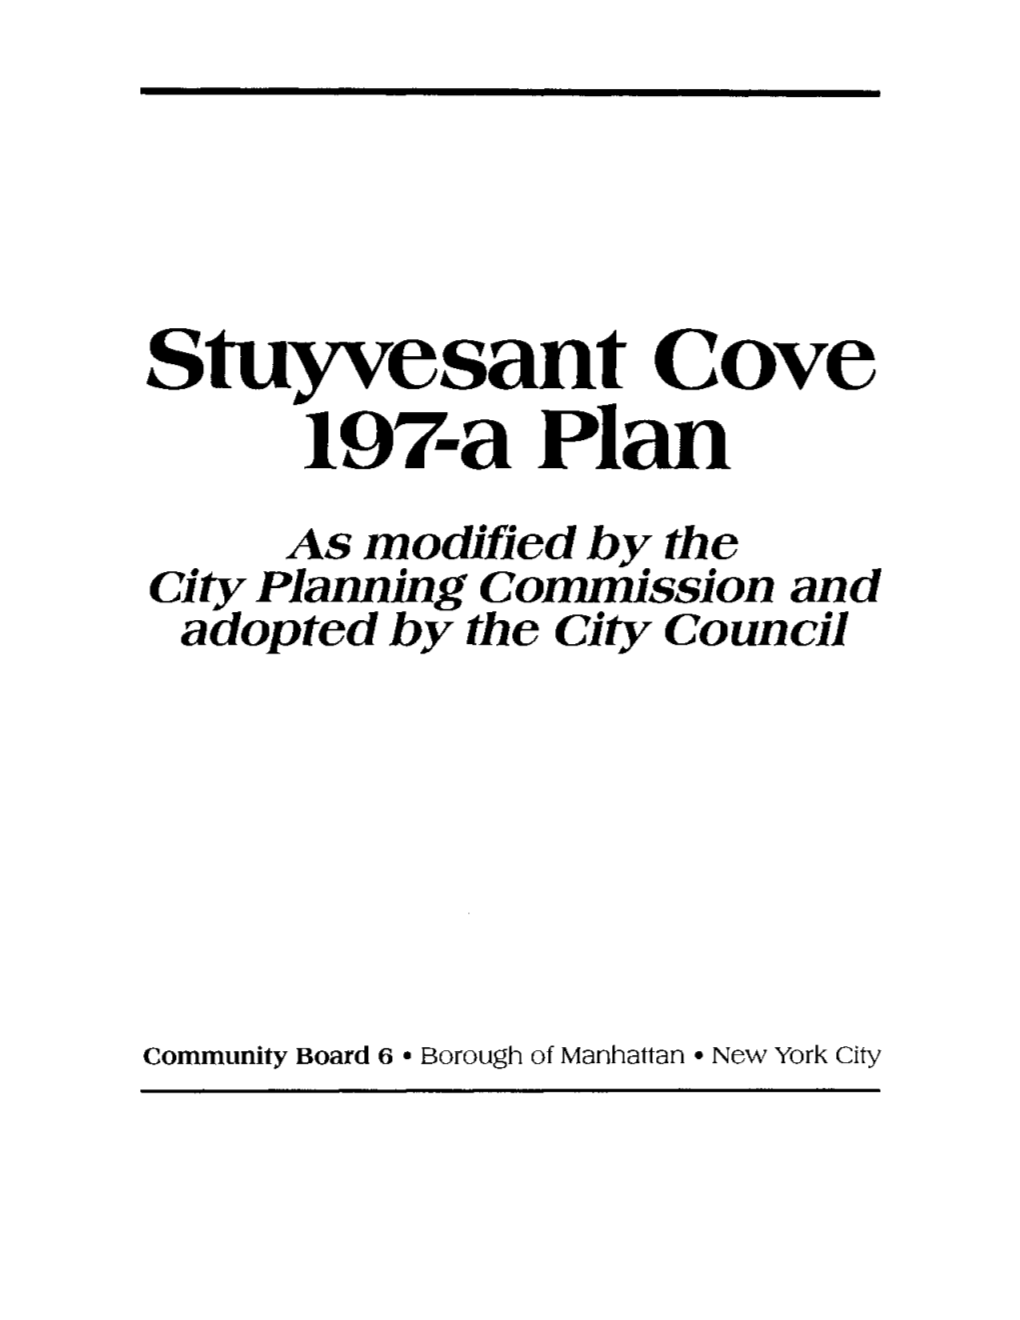 Manhattan CD 6 Stuyvesant Cove 197-A Plan